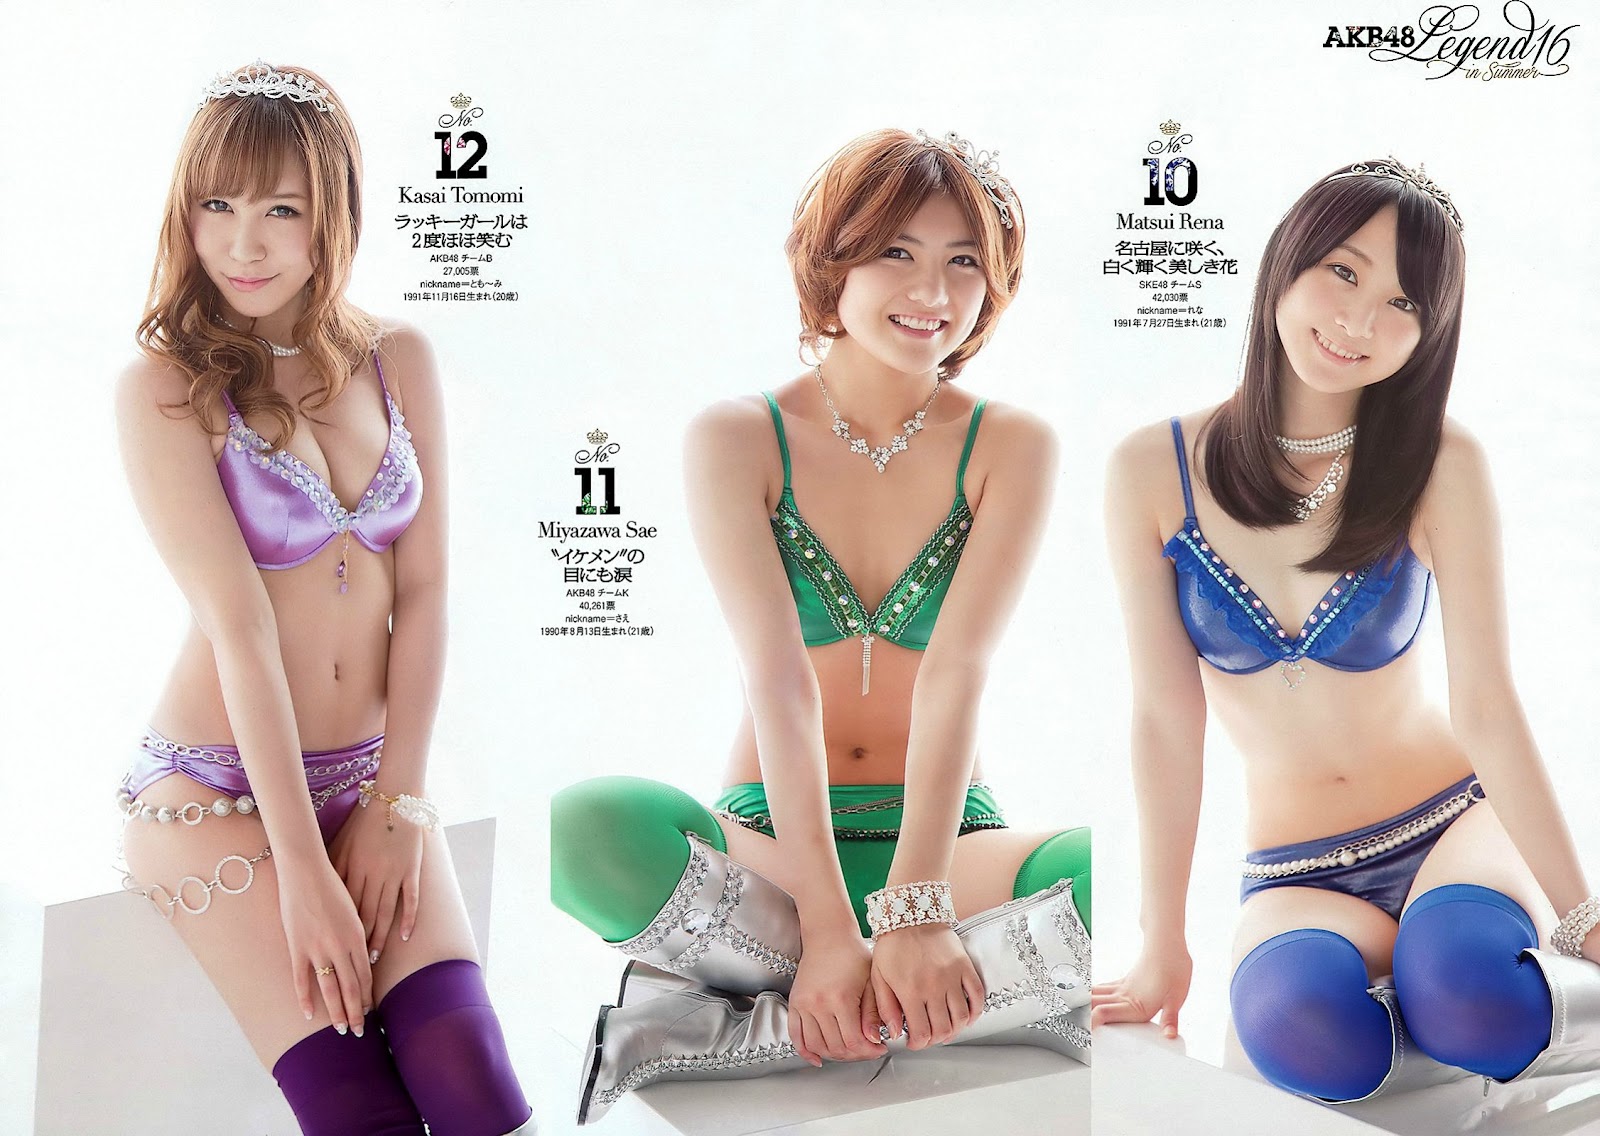 AKB48 Weekly Playboy Senbatsu 2012 | Beautiful Song Lyrics